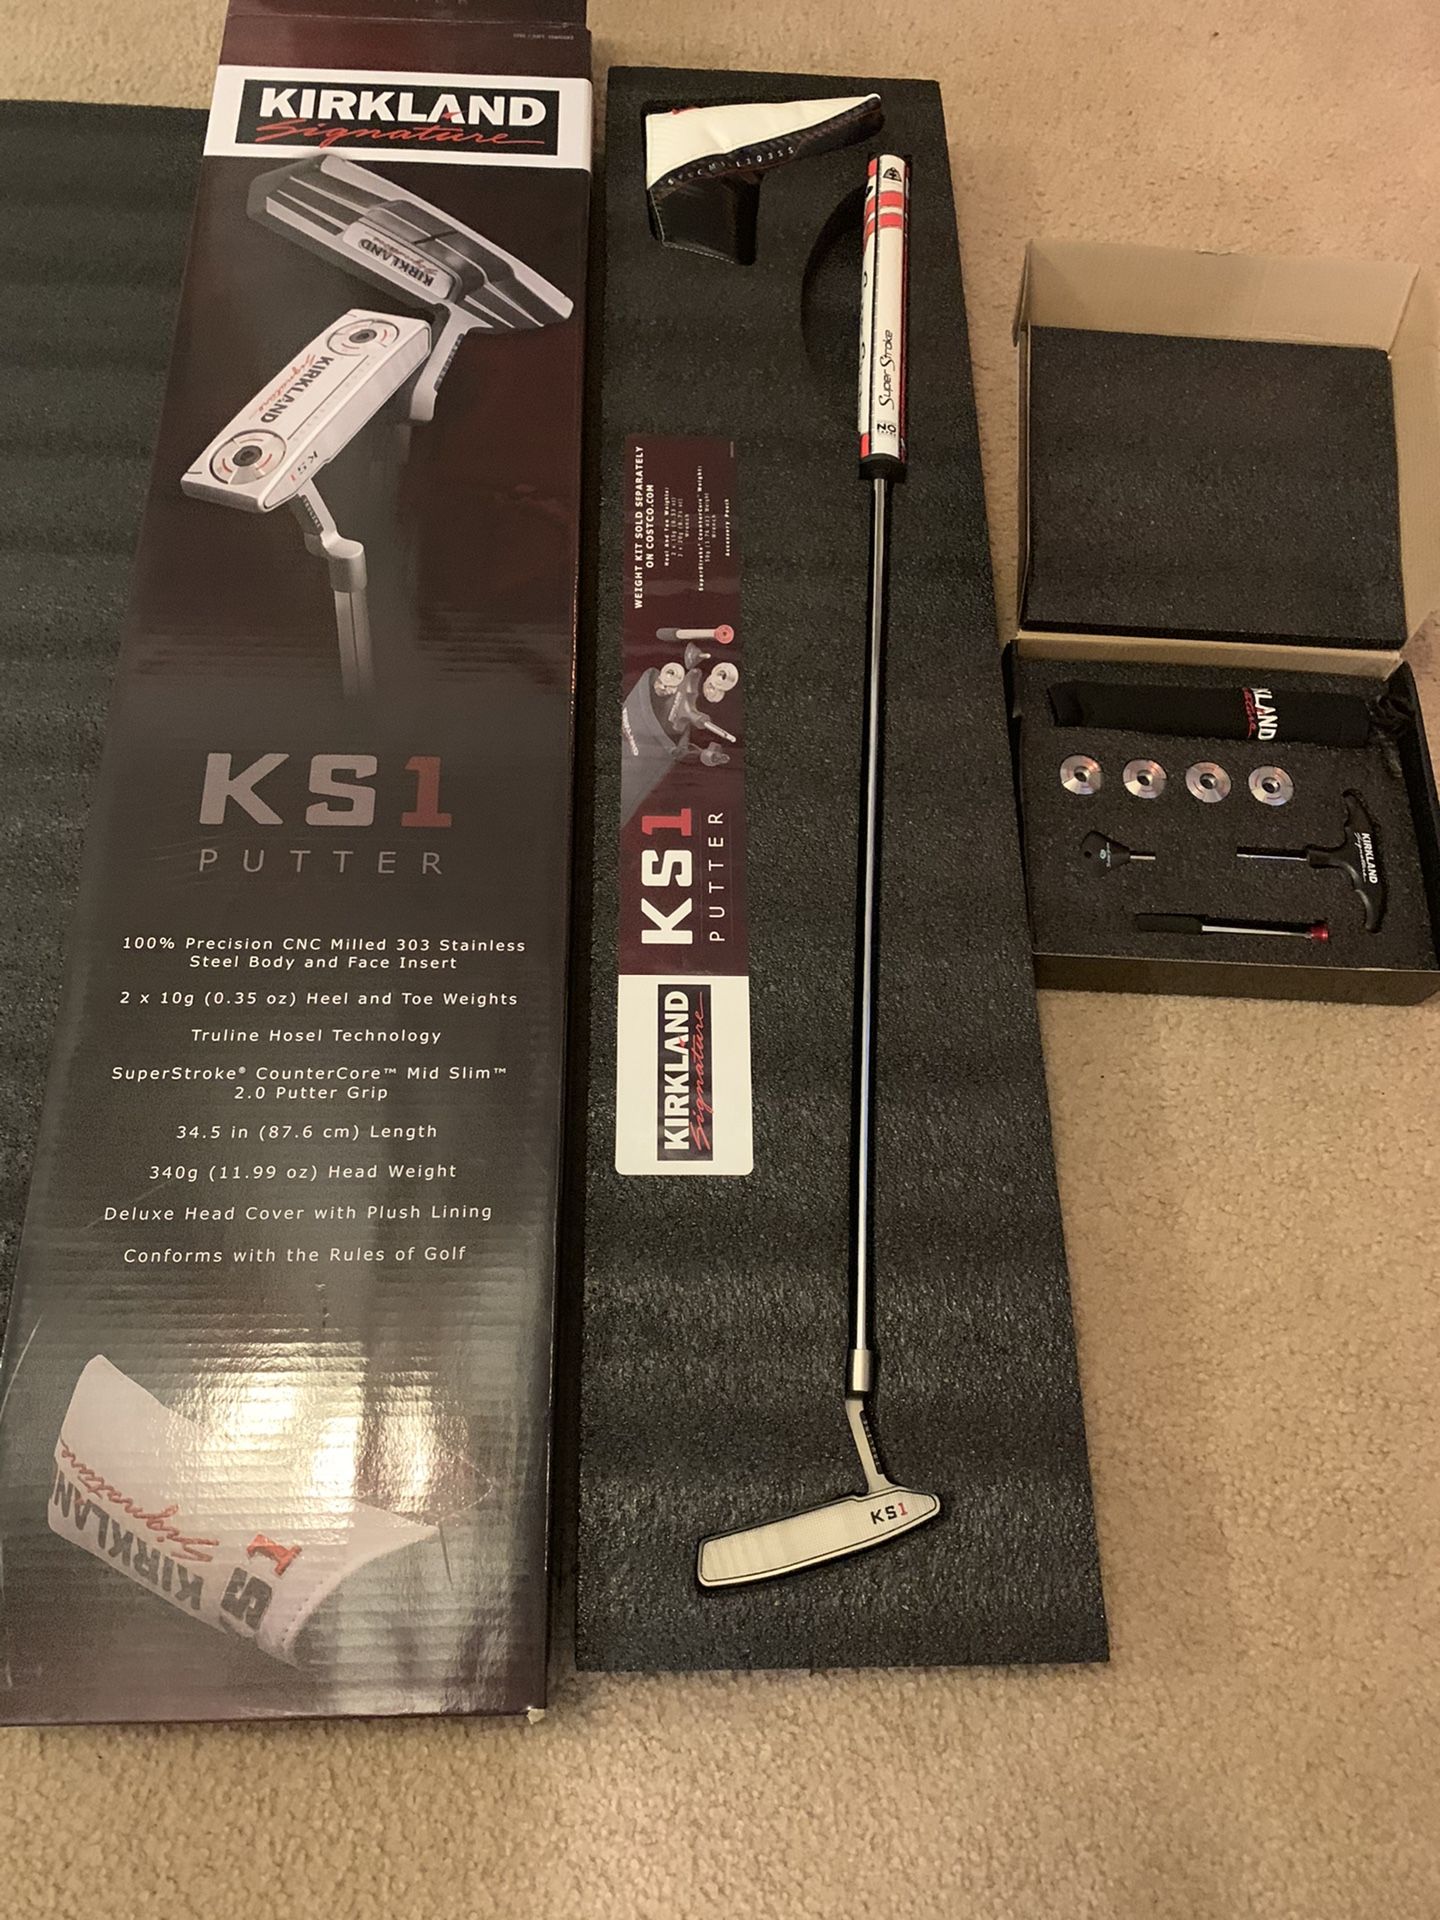 Kirkland KS1 Putter with Weight kit